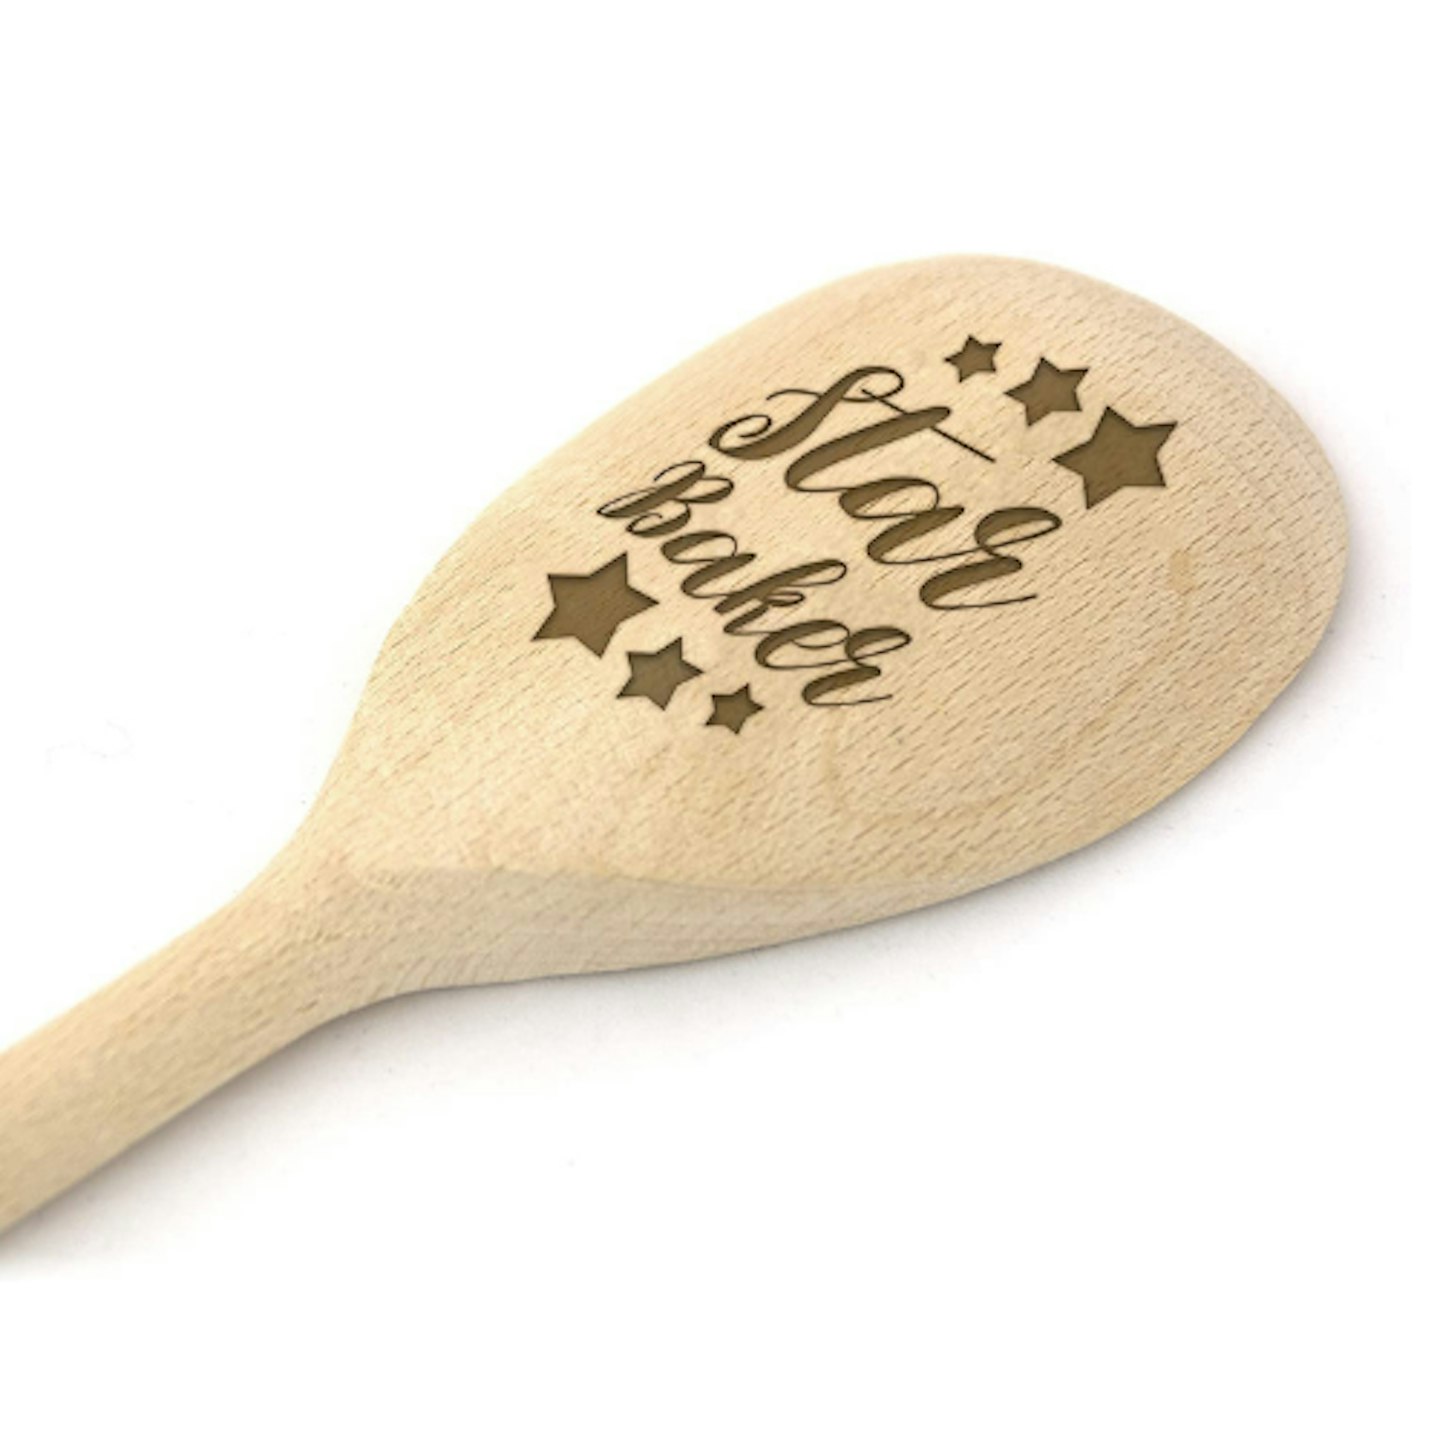 Luxbour Star Baker Wooden Baking Spoon